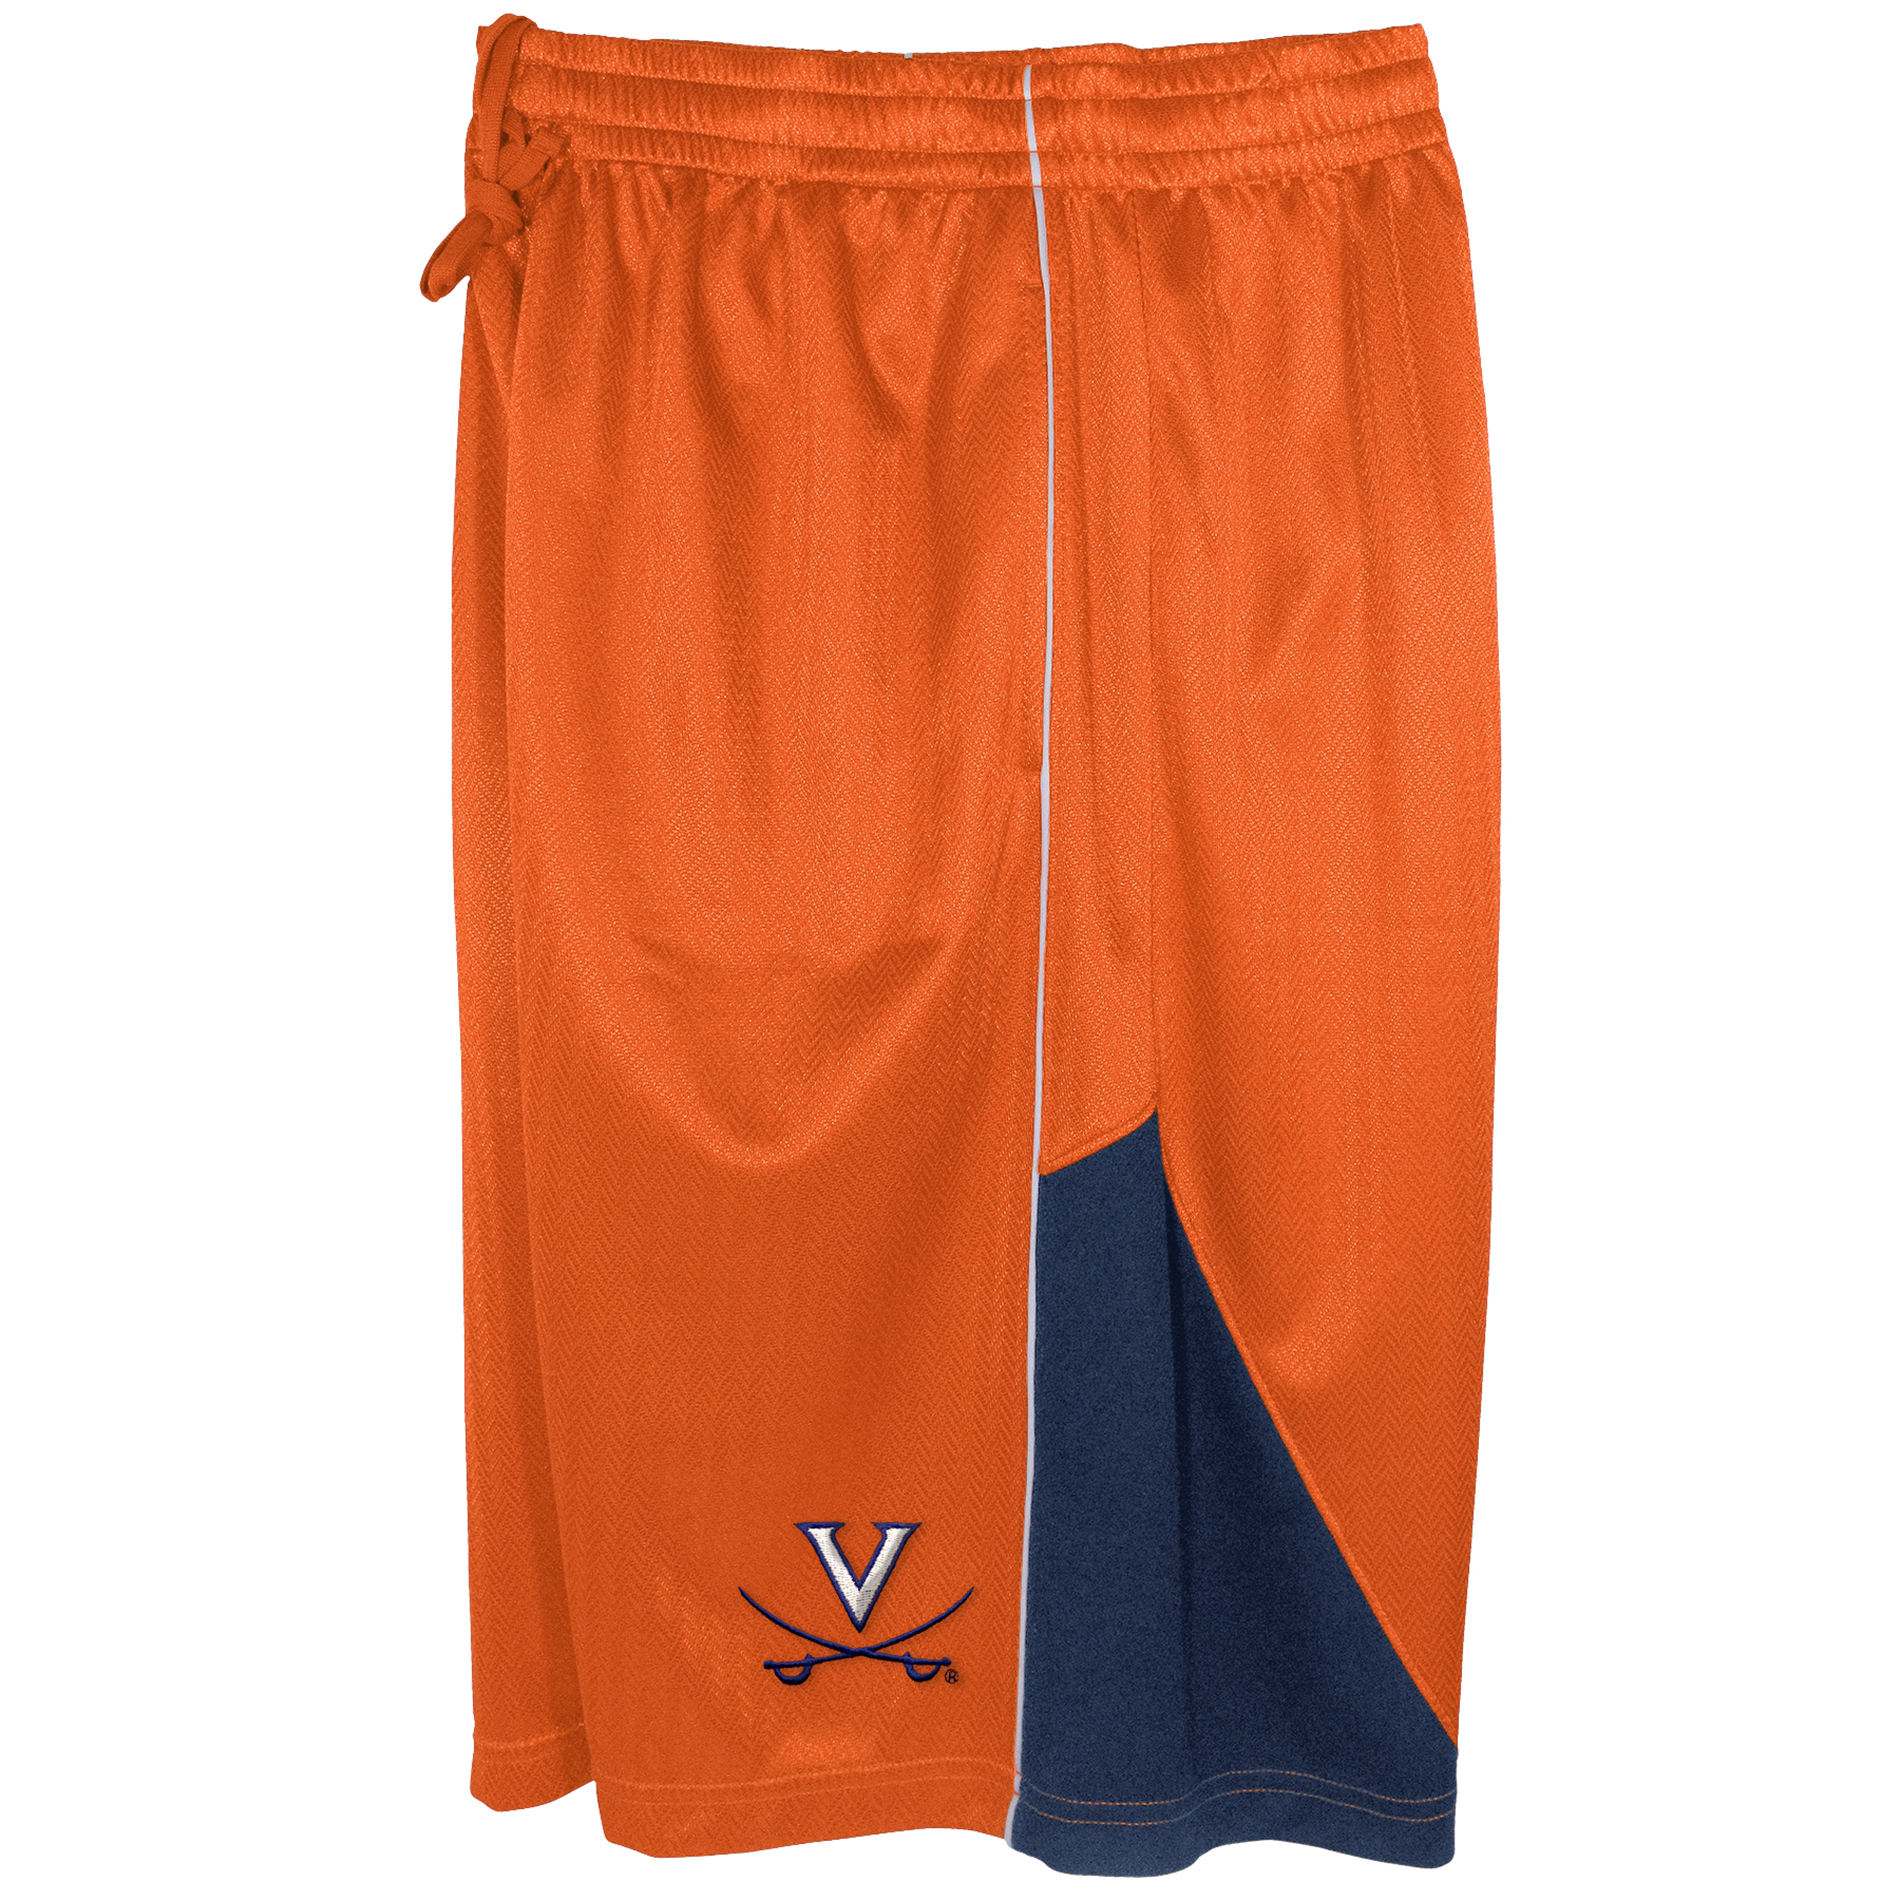 NCAA Mens' University of Virginia Cavaliers Basketball Shorts